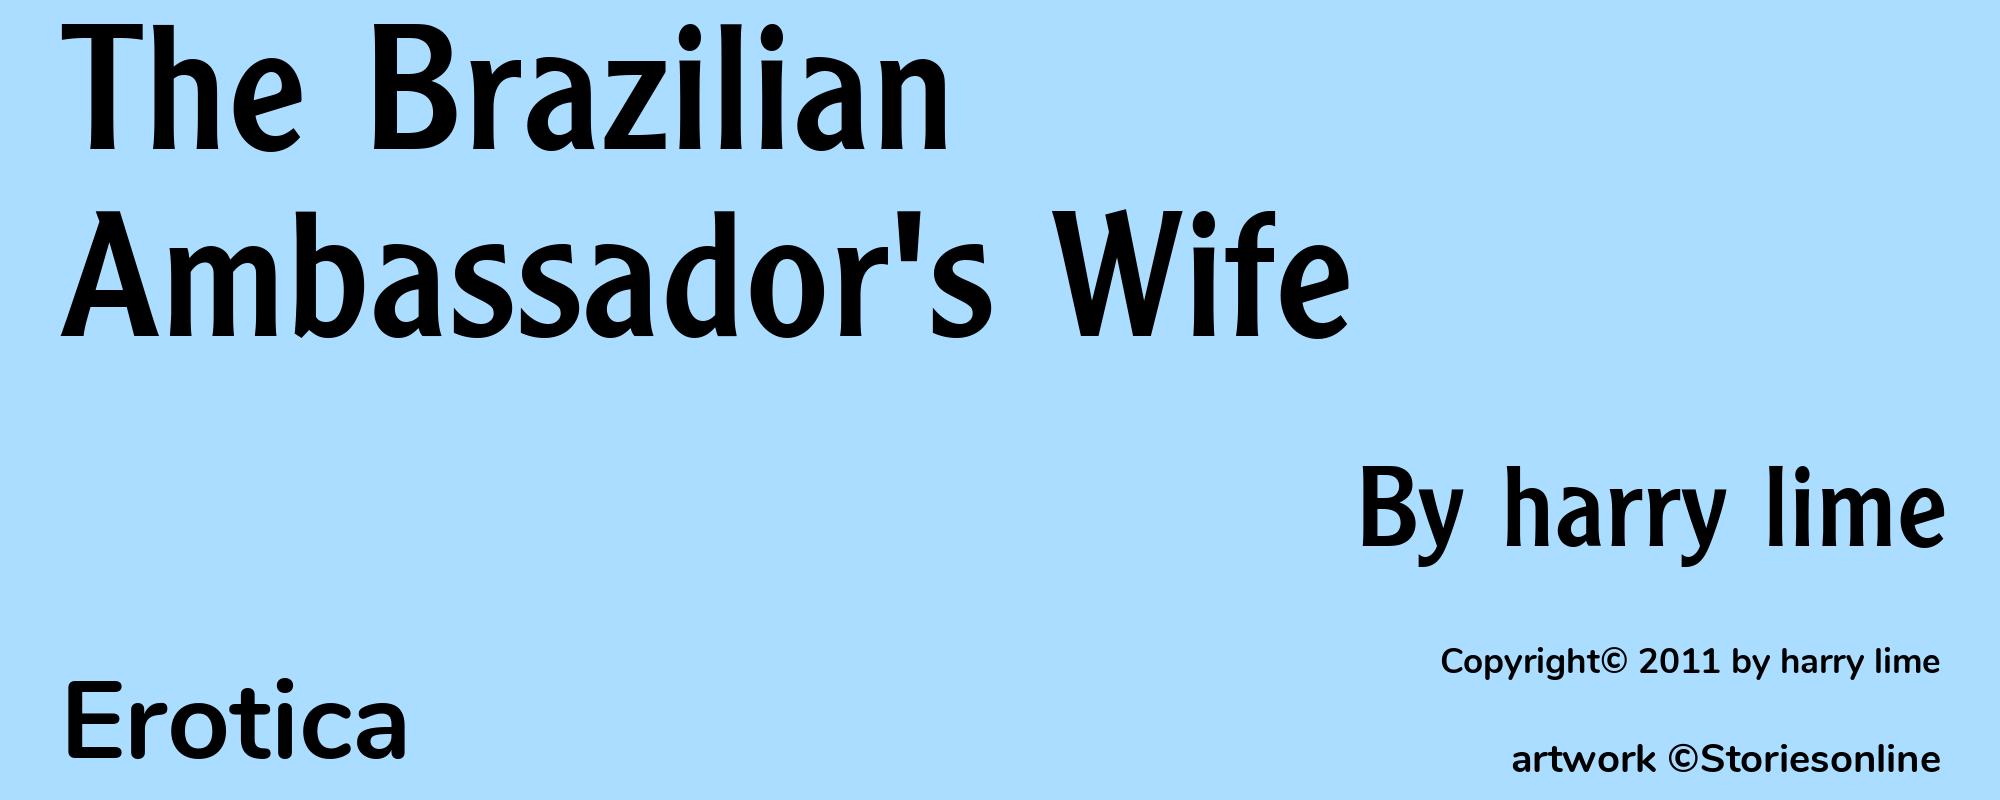 The Brazilian Ambassador's Wife - Cover